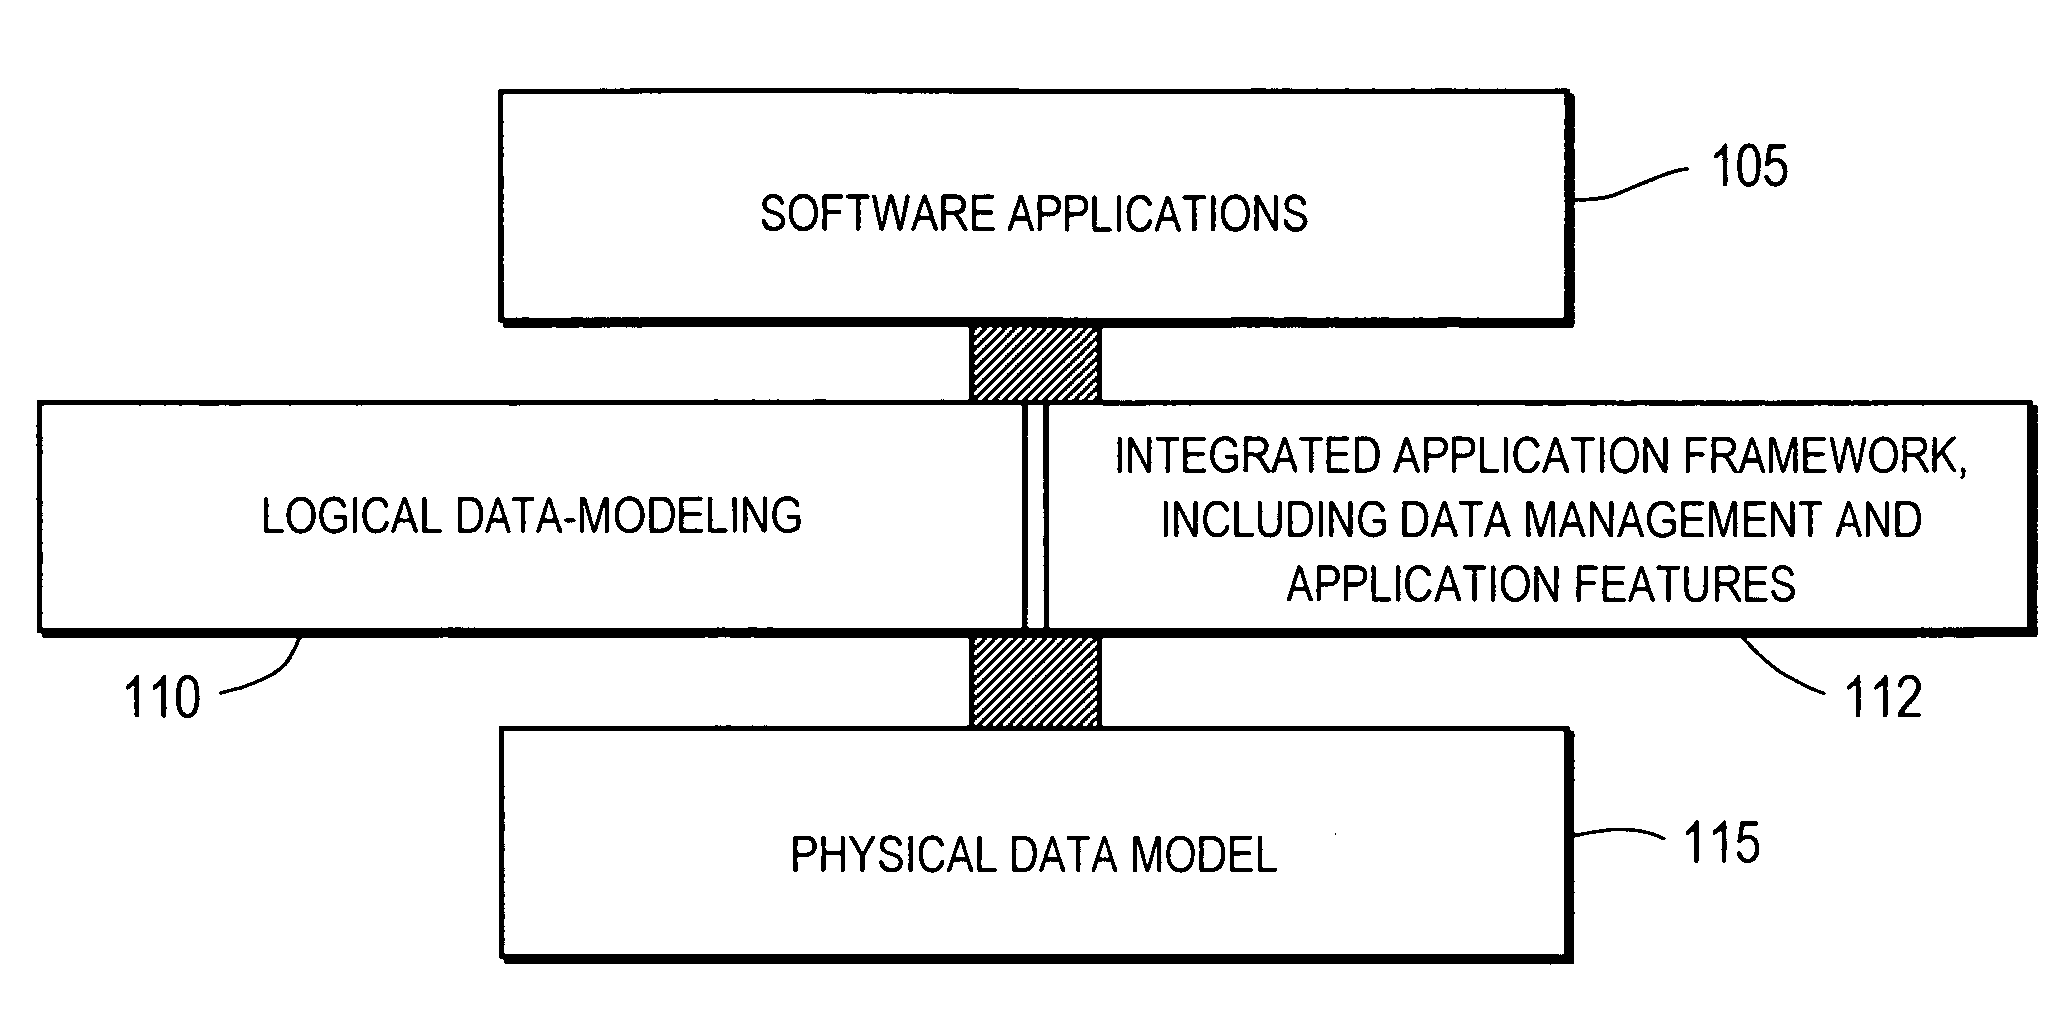 Logical data modeling and integrated application framework